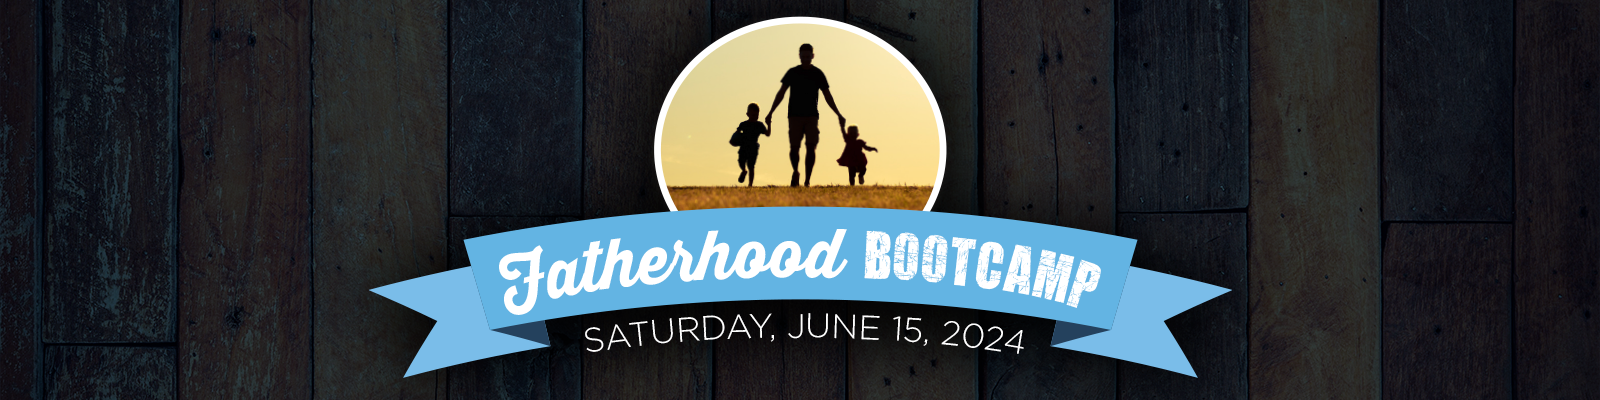 fatherhood bootcamp